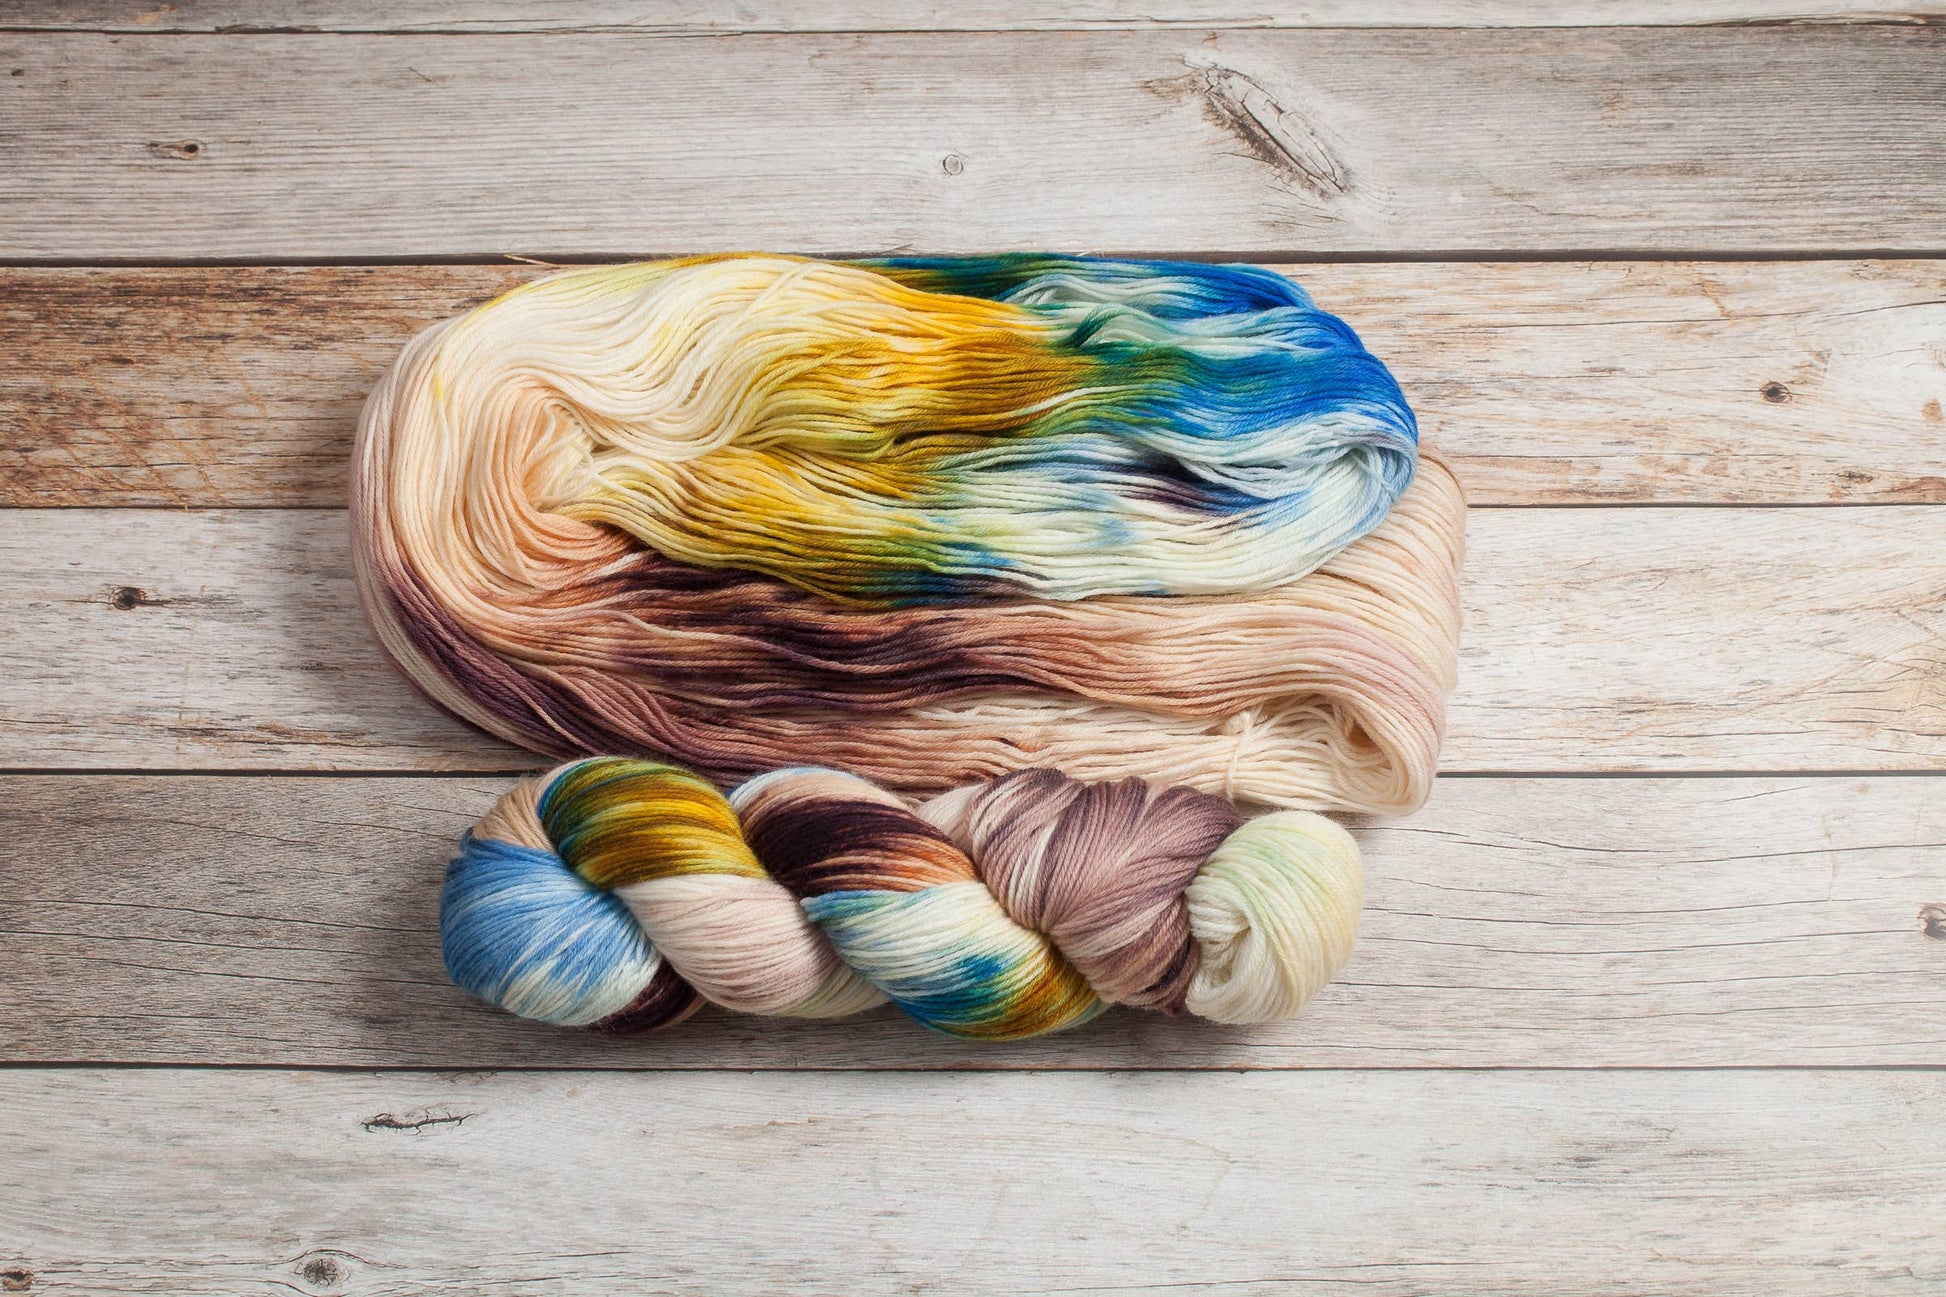 Lauritzen Dyed Fibers Sol - Fingering - 75/25 Superwash Merino & Nylon Hand Dyed Yarn in Colorway: Sandy Sea Yarn